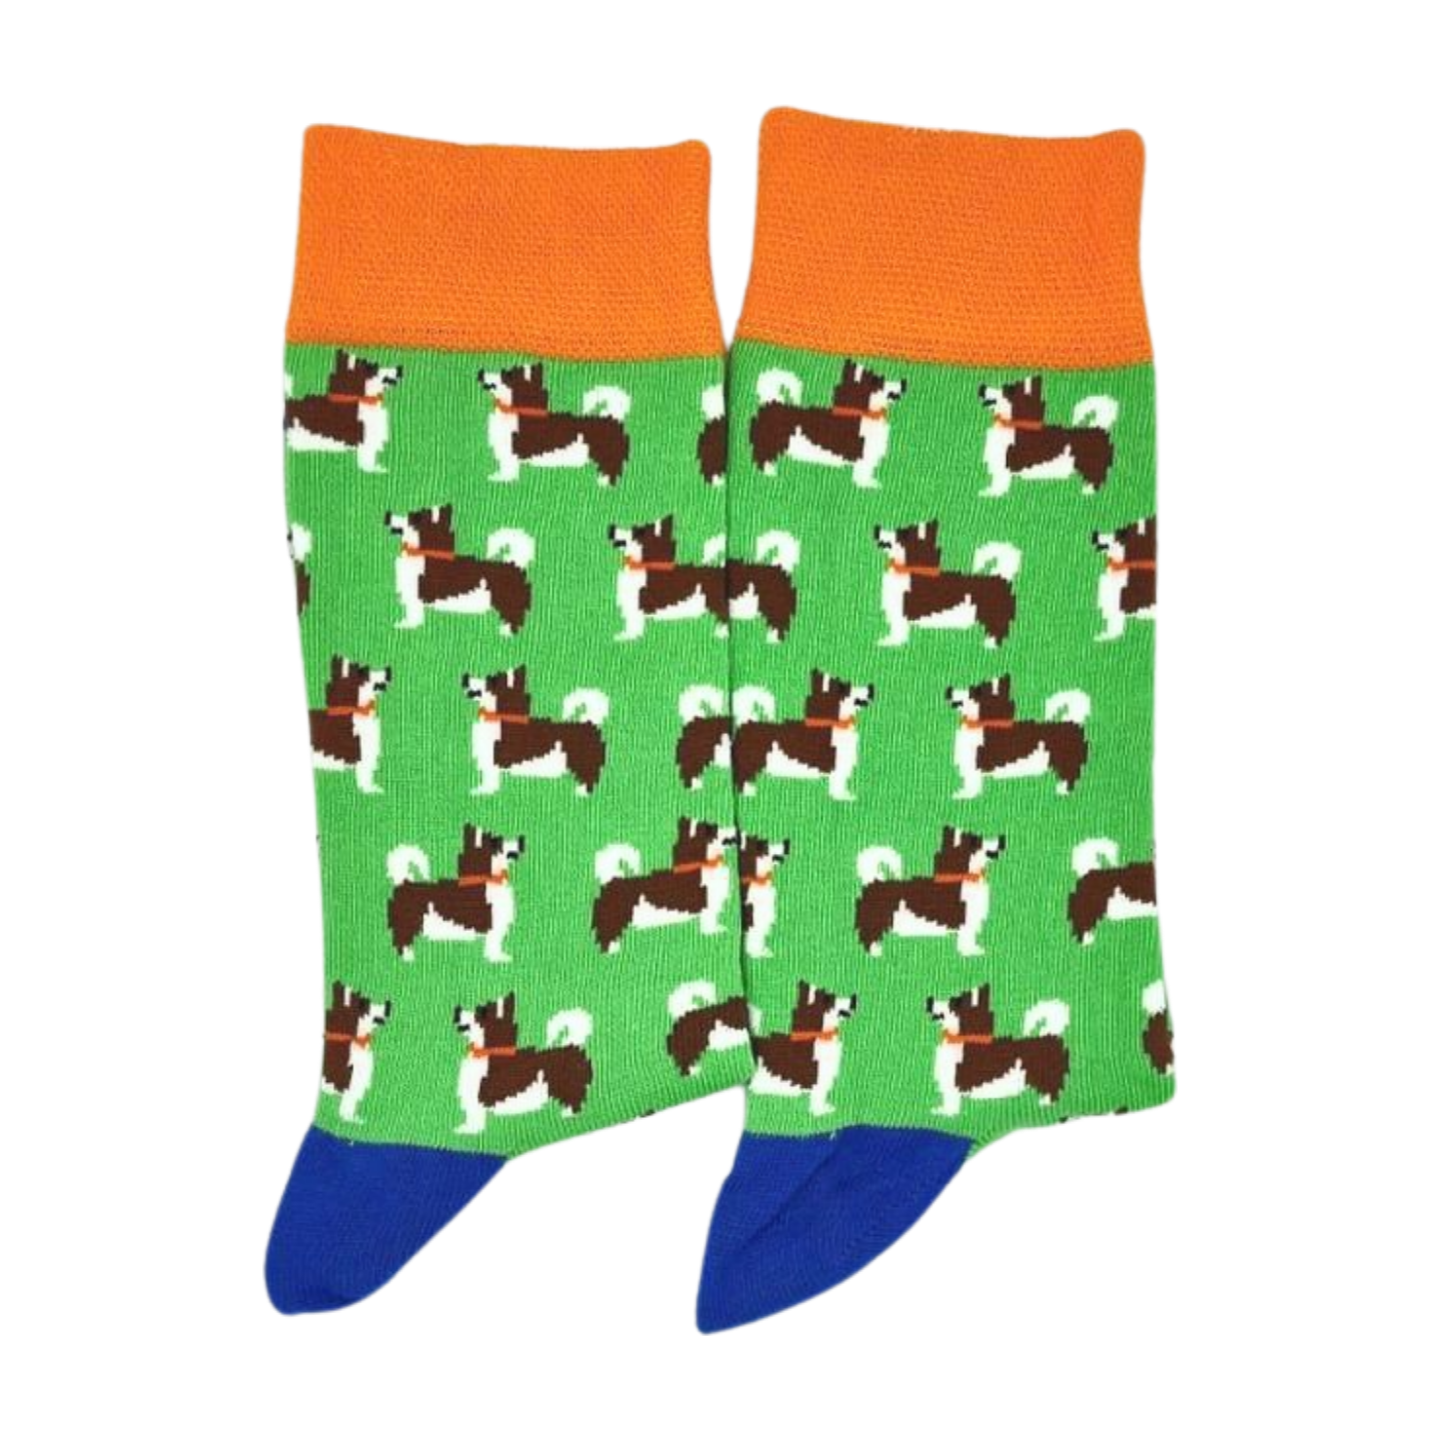 Norwich Terrier Dog Design Socks